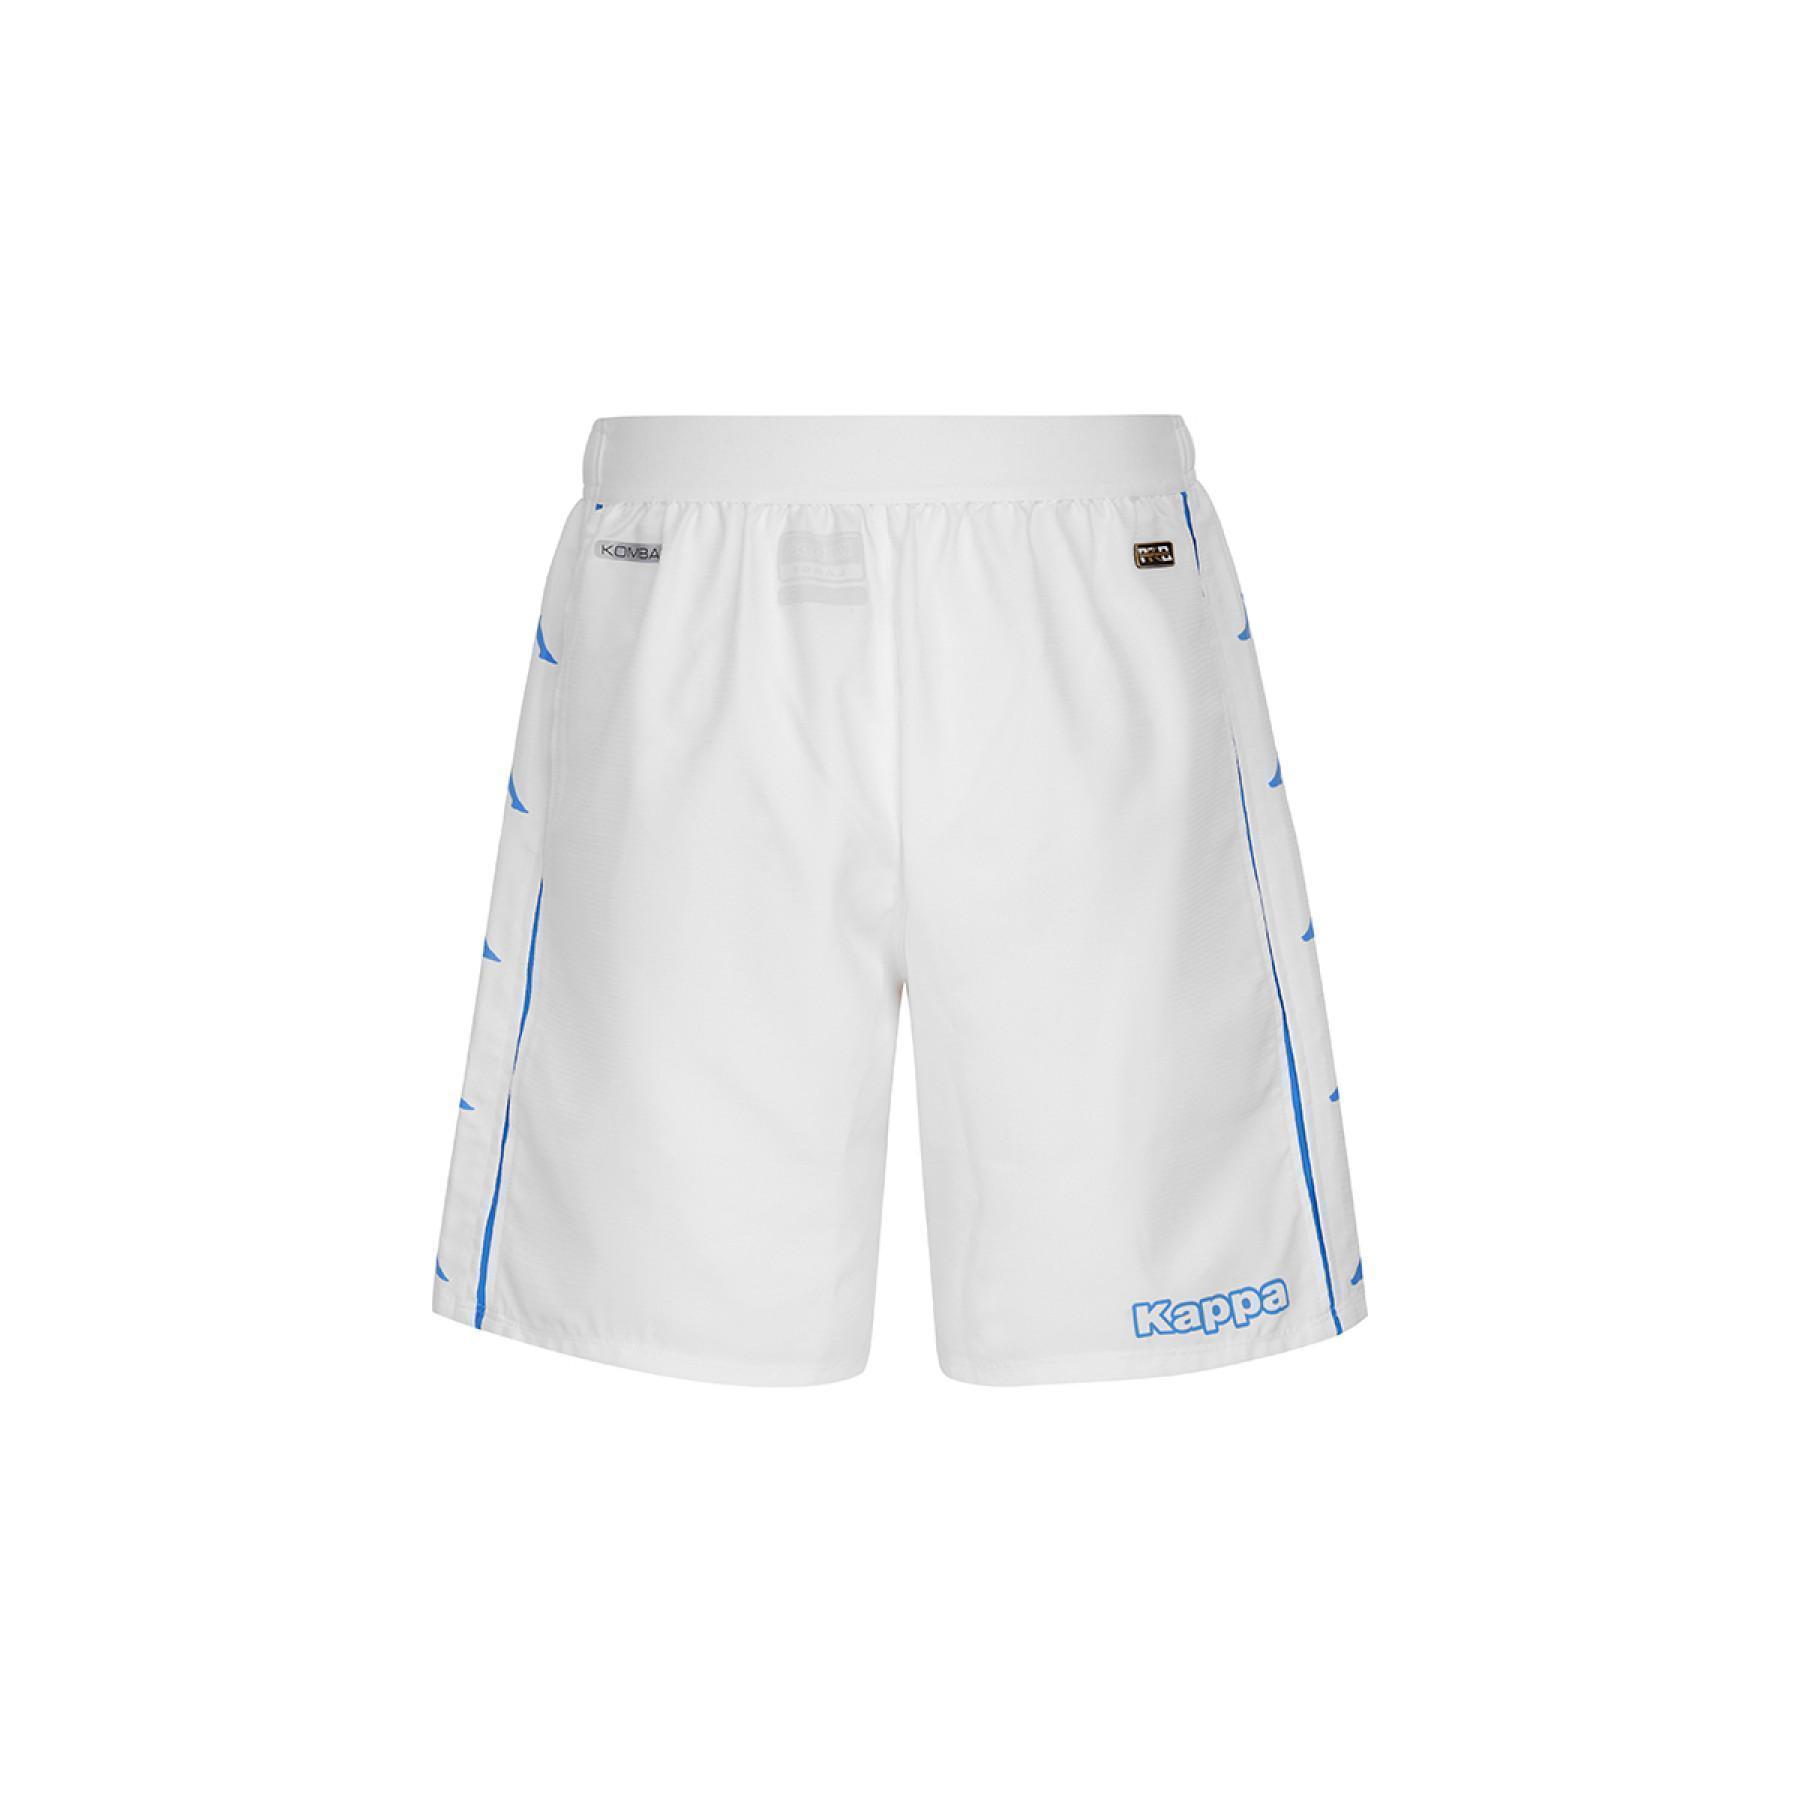 Home shorts SSC Napoli 2020/21